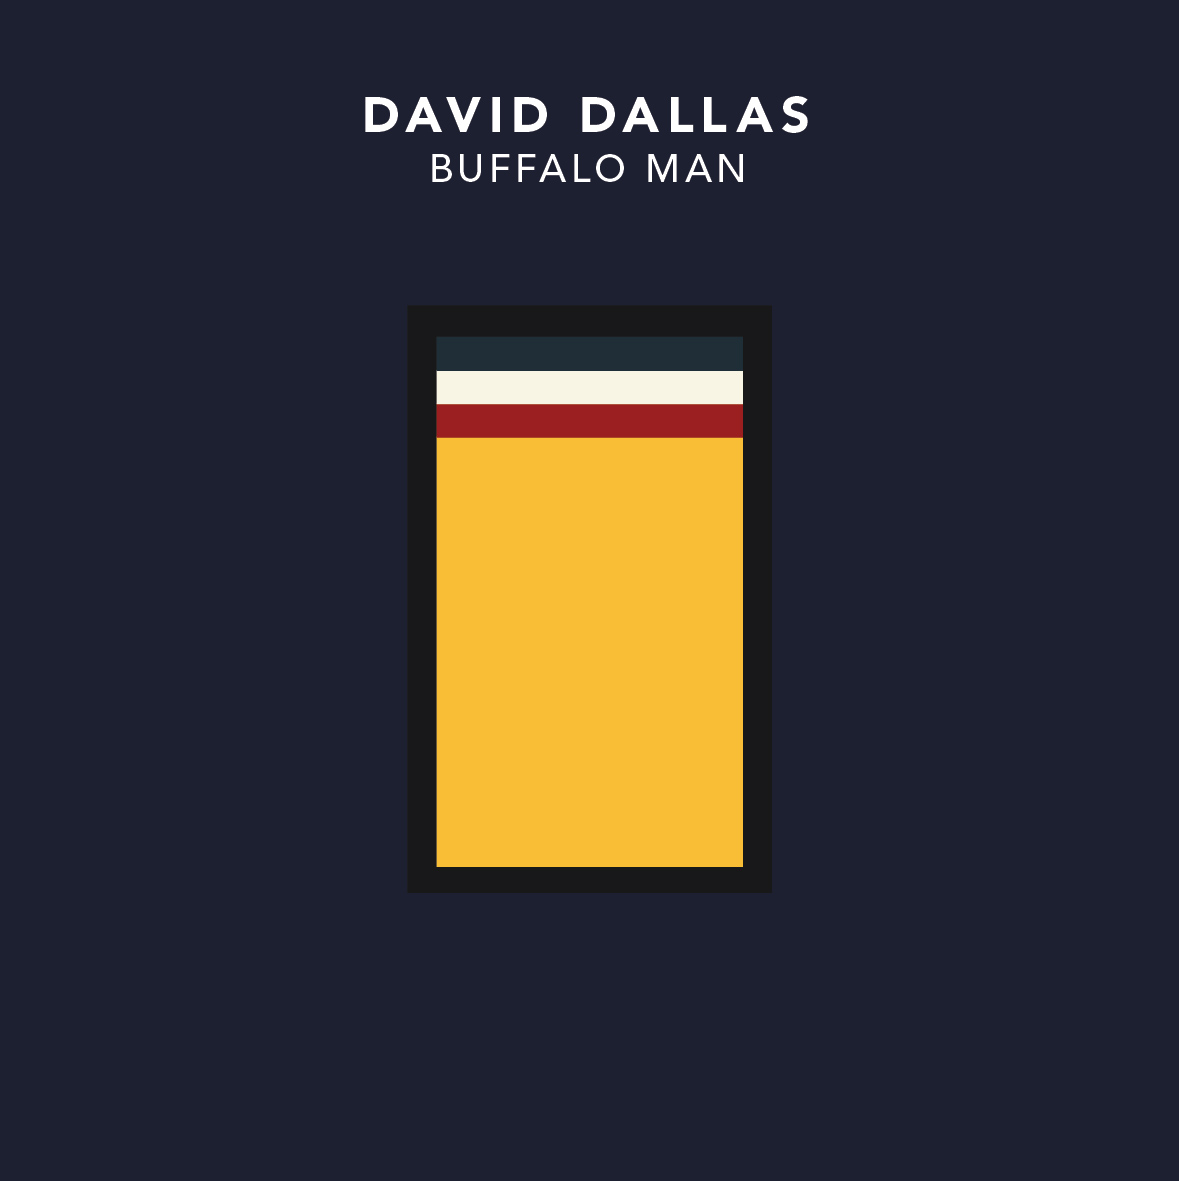 David Dallas – Buffalo Man EP (2012) [Hip Hop]: A Must Have EP!